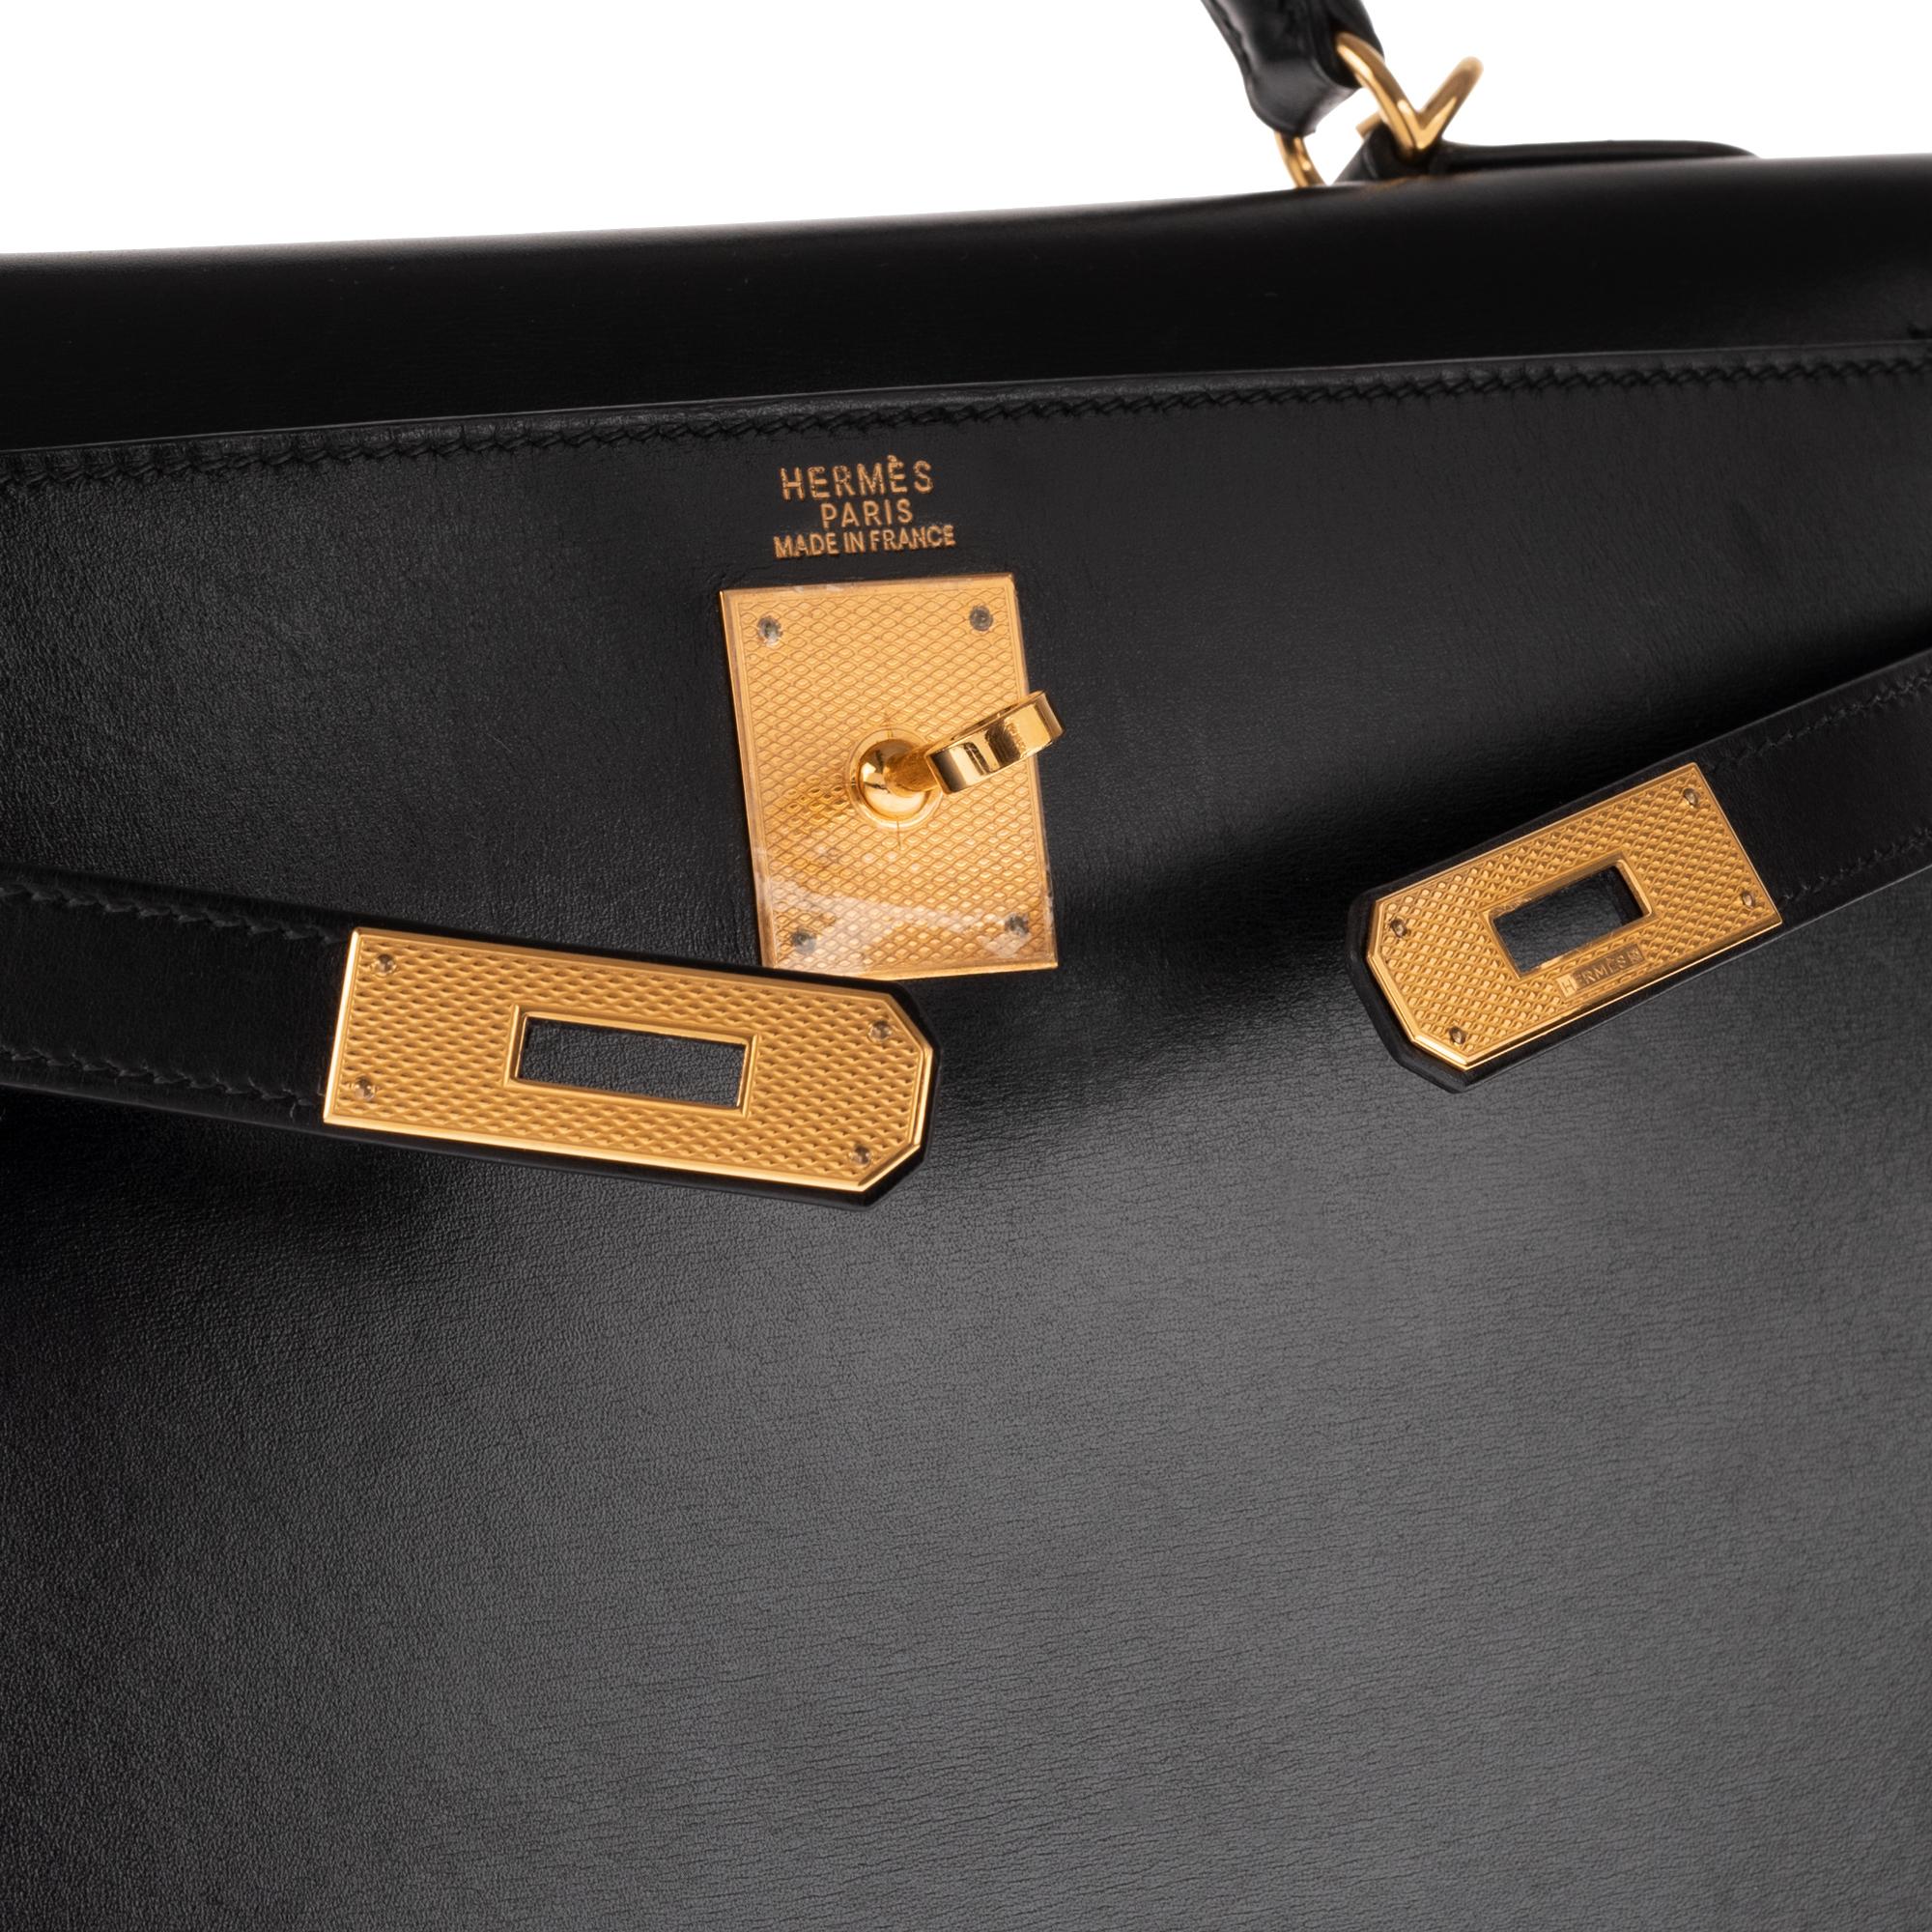 Women's Very limited Handbag Hermès Kelly sellier 32 with strap in black calfskin, GHW!